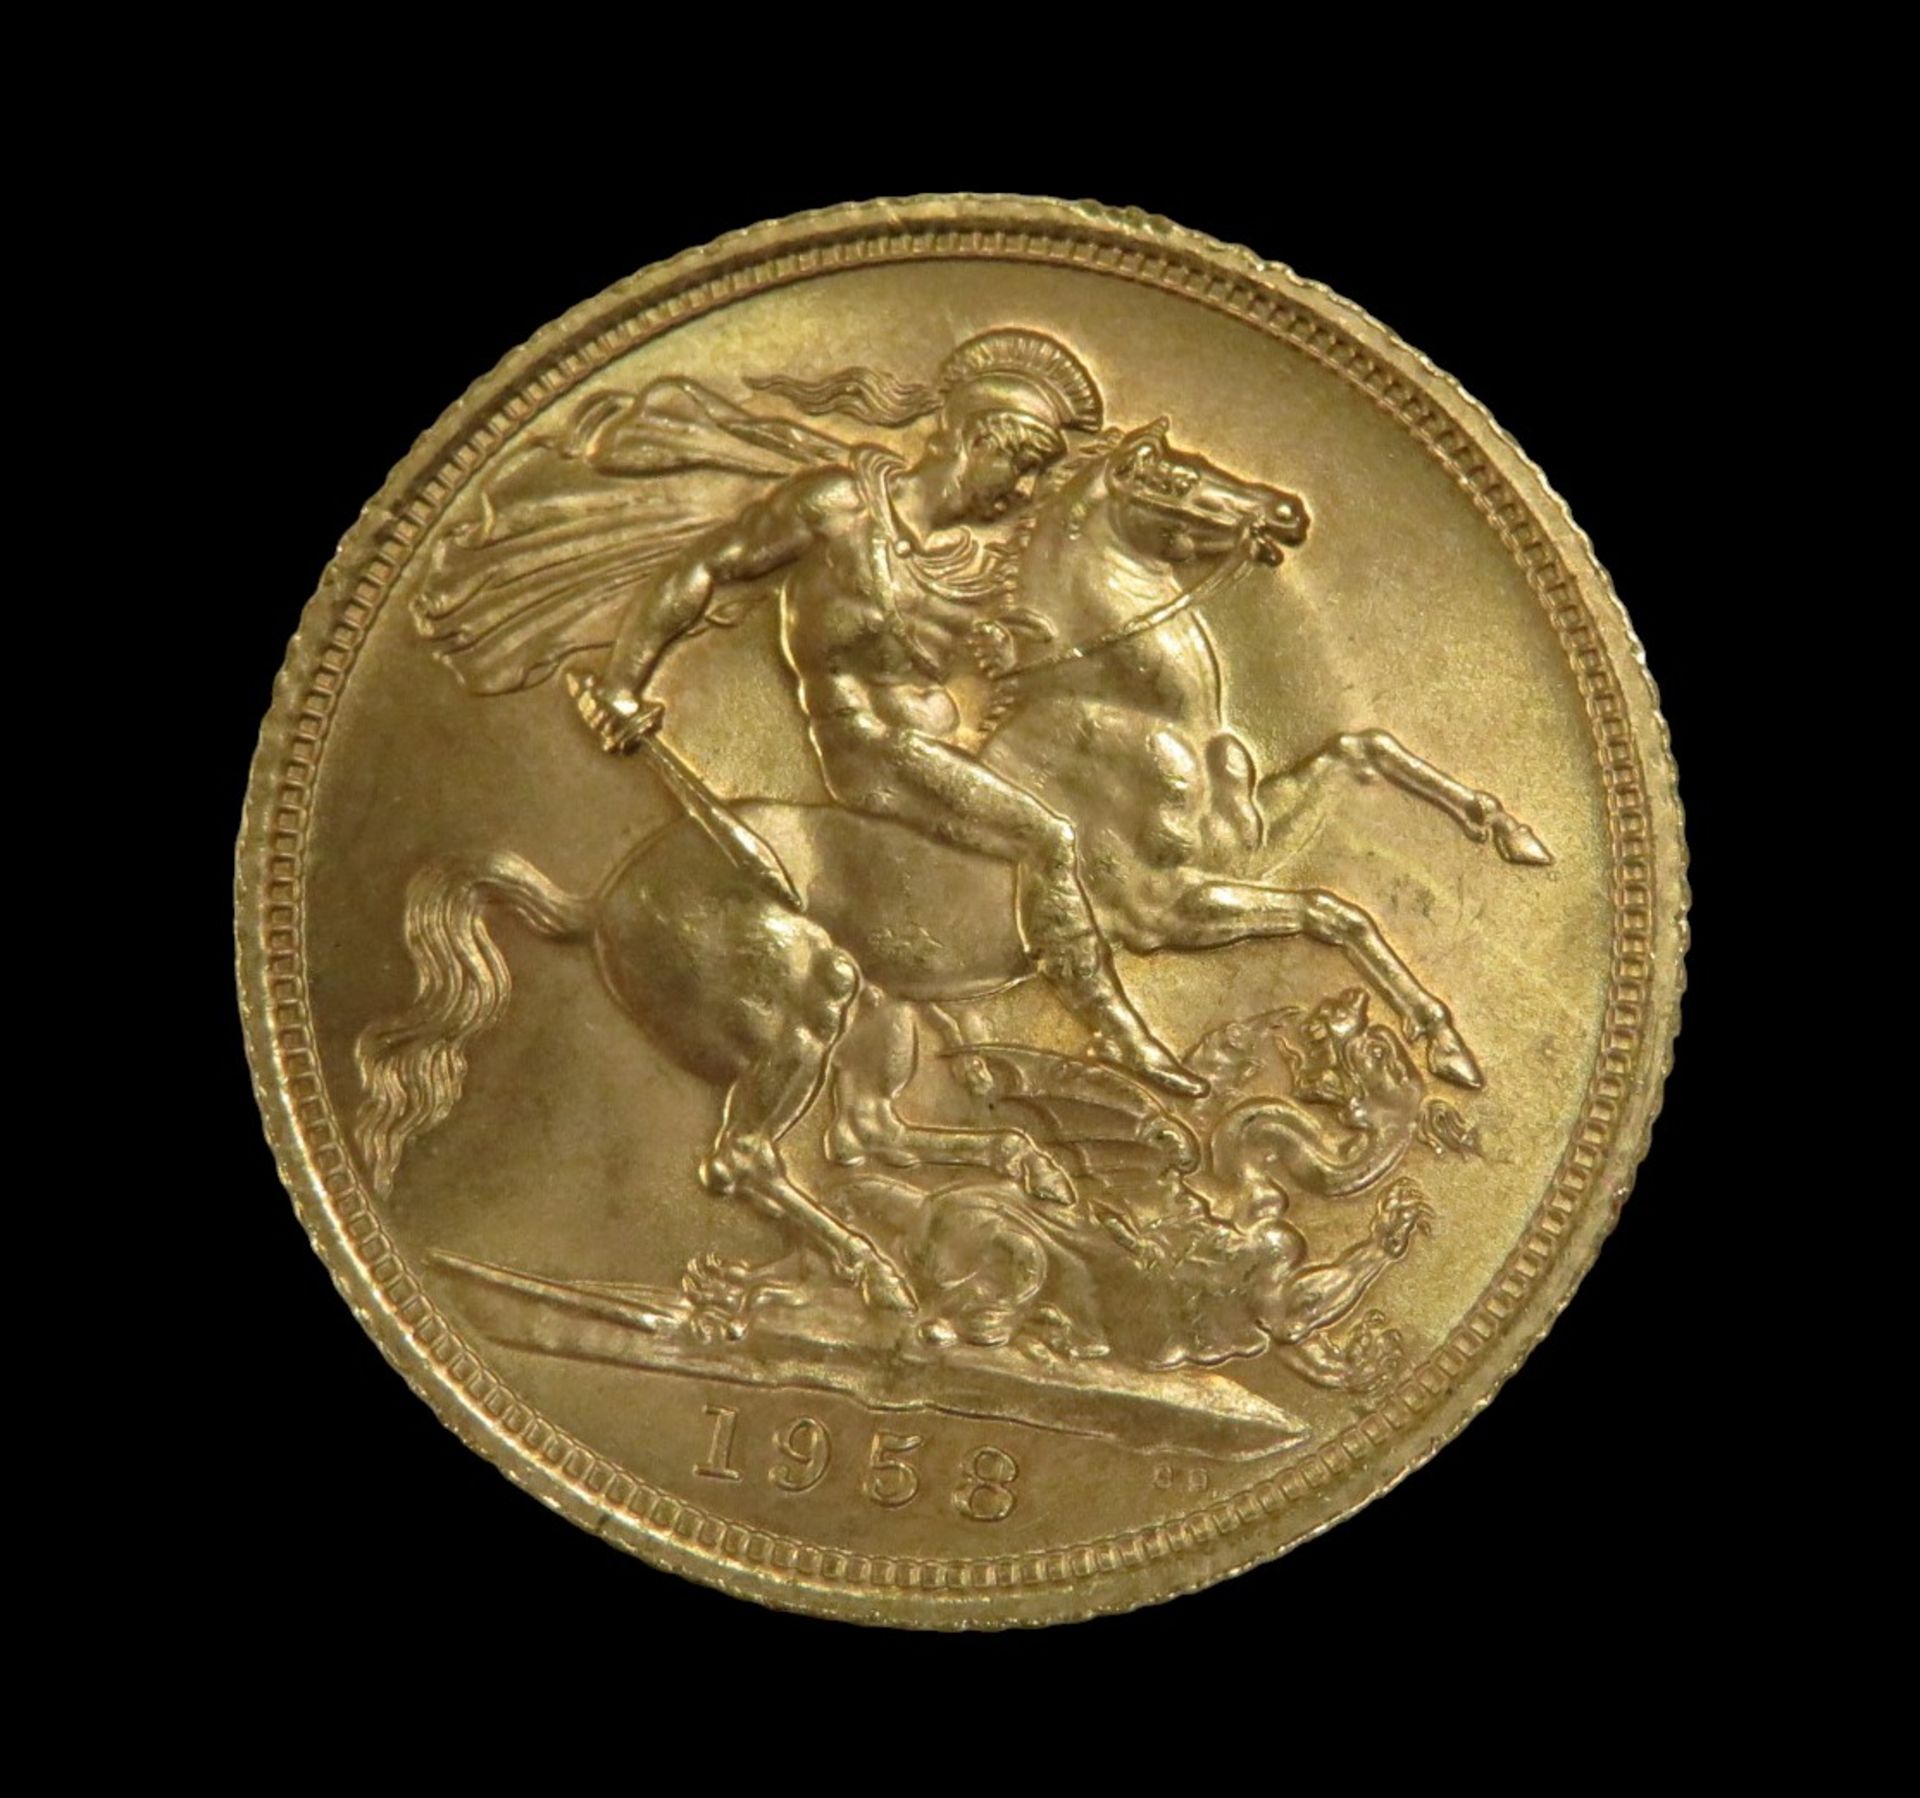 Goldmünze, 1 Pfund, Sovereign, Elizabeth II, 1958, Gold 916/000, 7,99 g, d 2,2 cm. - Image 2 of 2